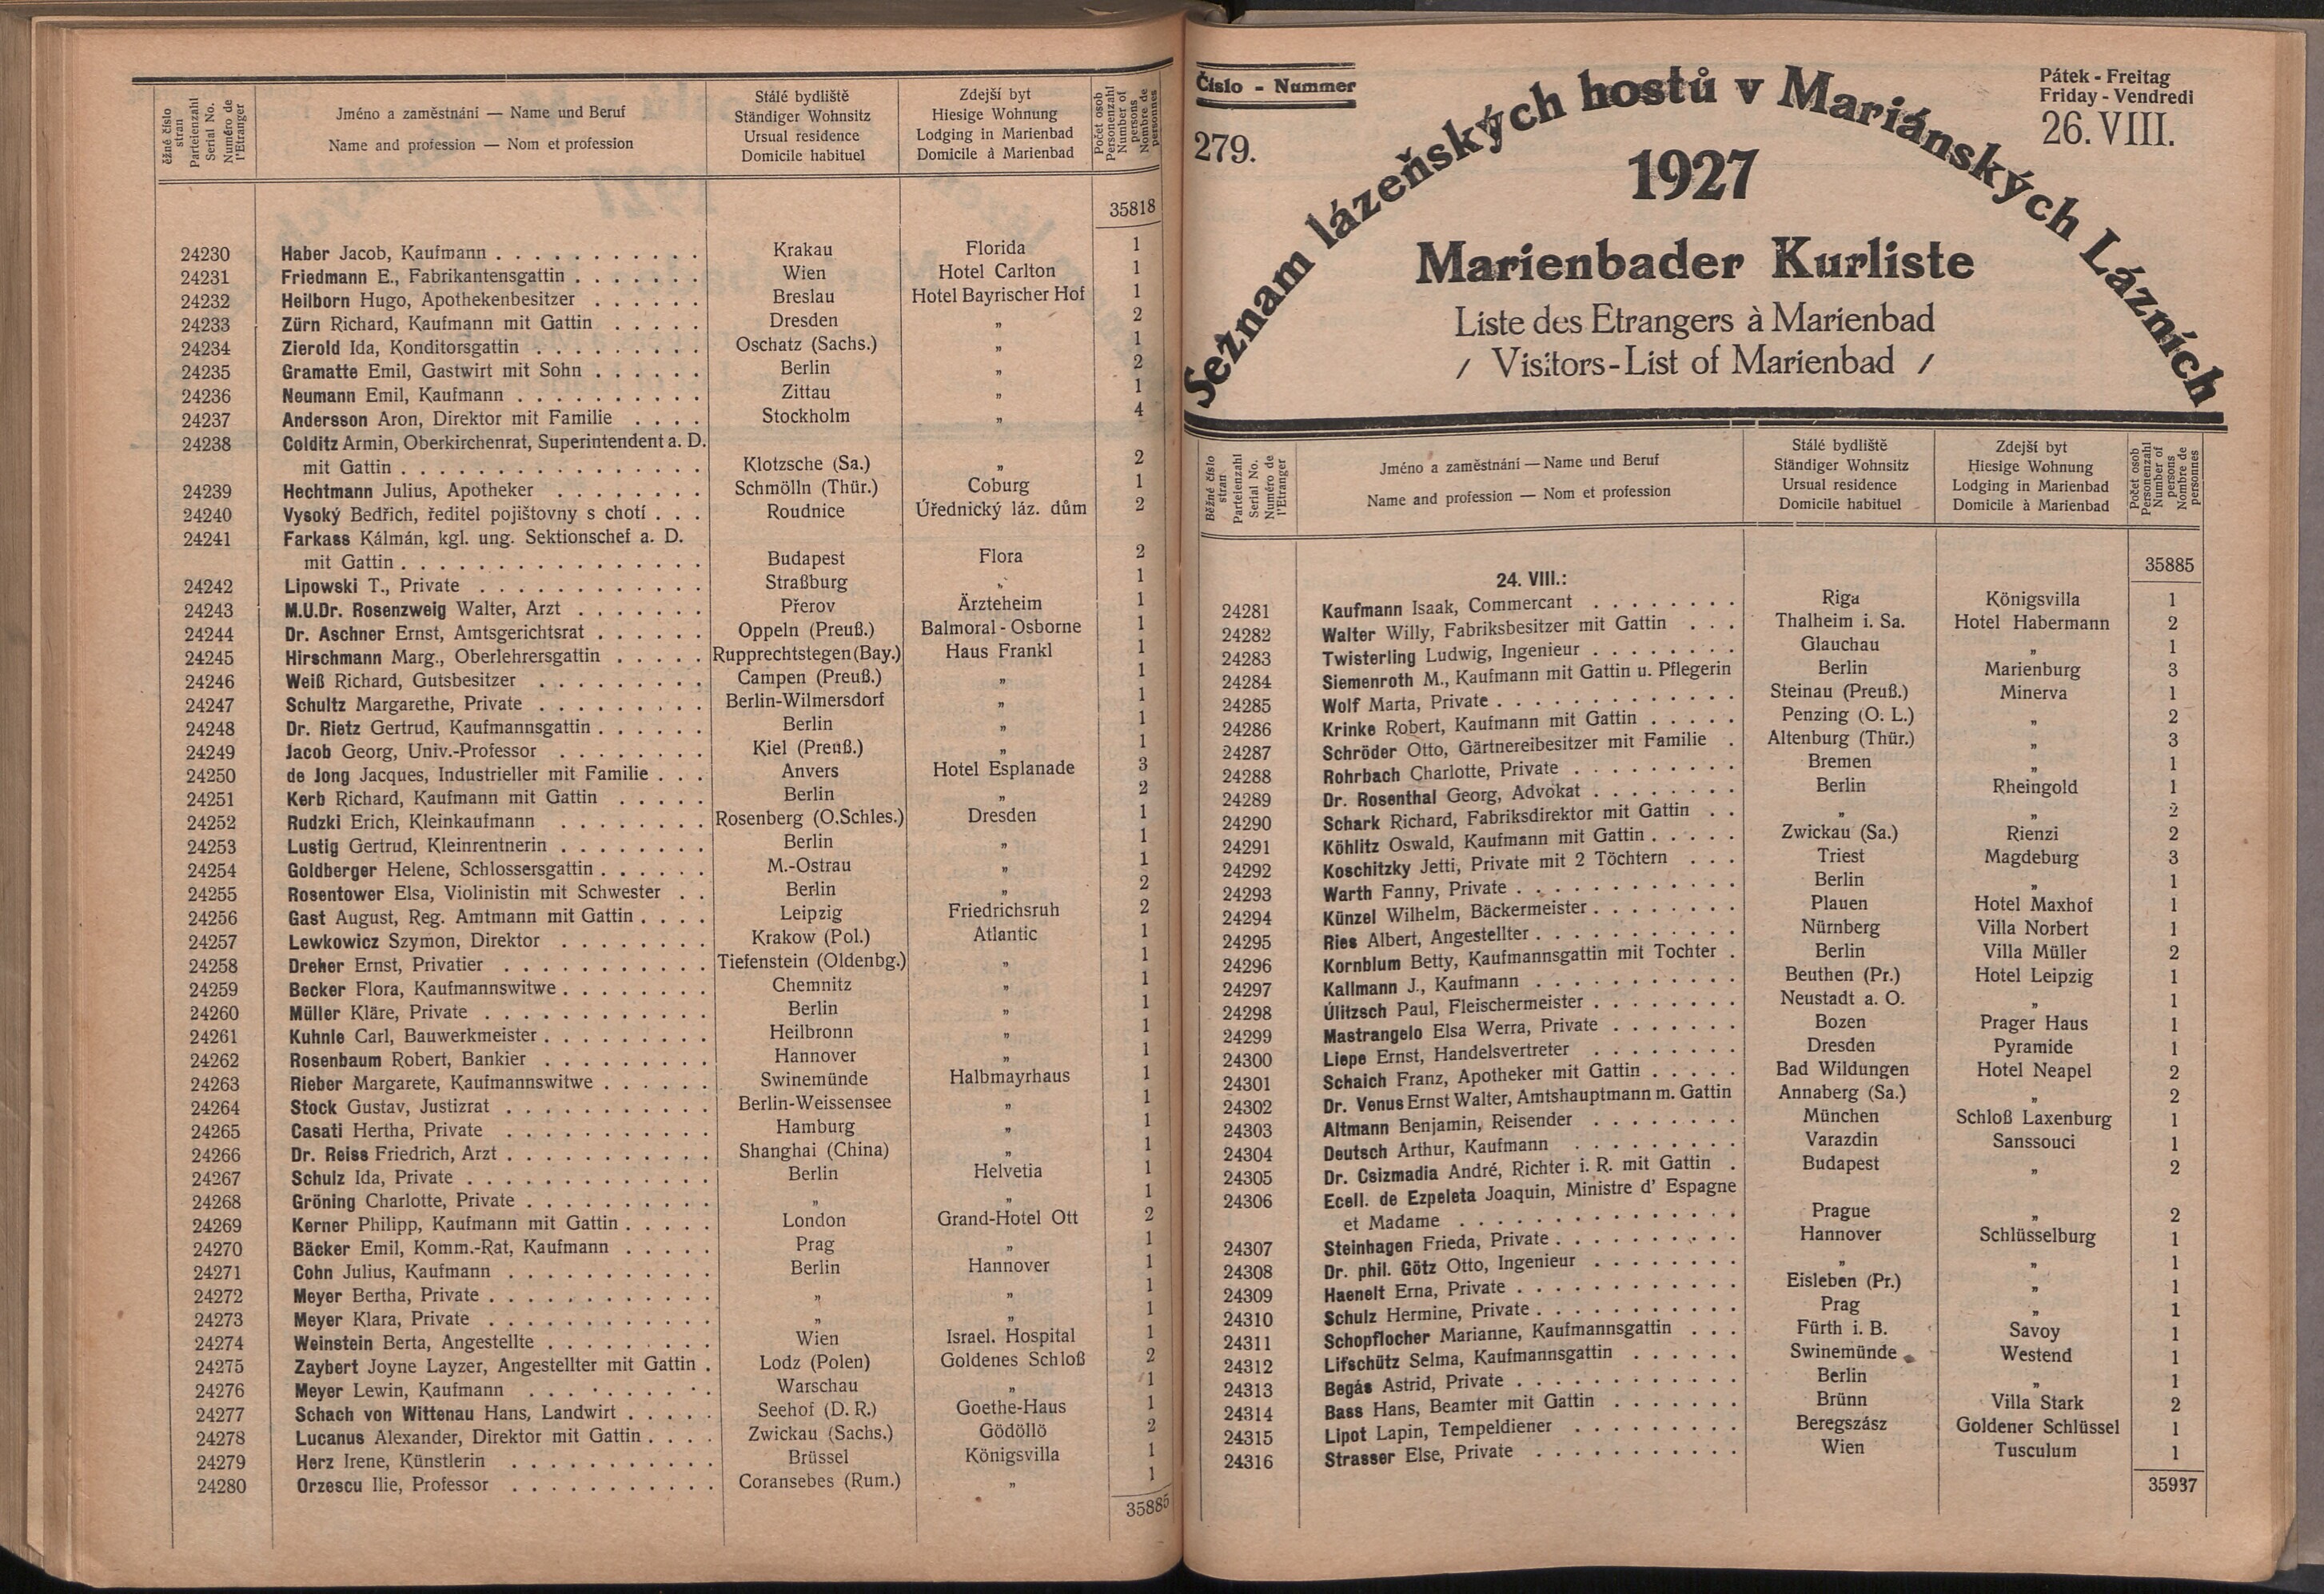 360. soap-ch_knihovna_marienbader-kurliste-1927_3600